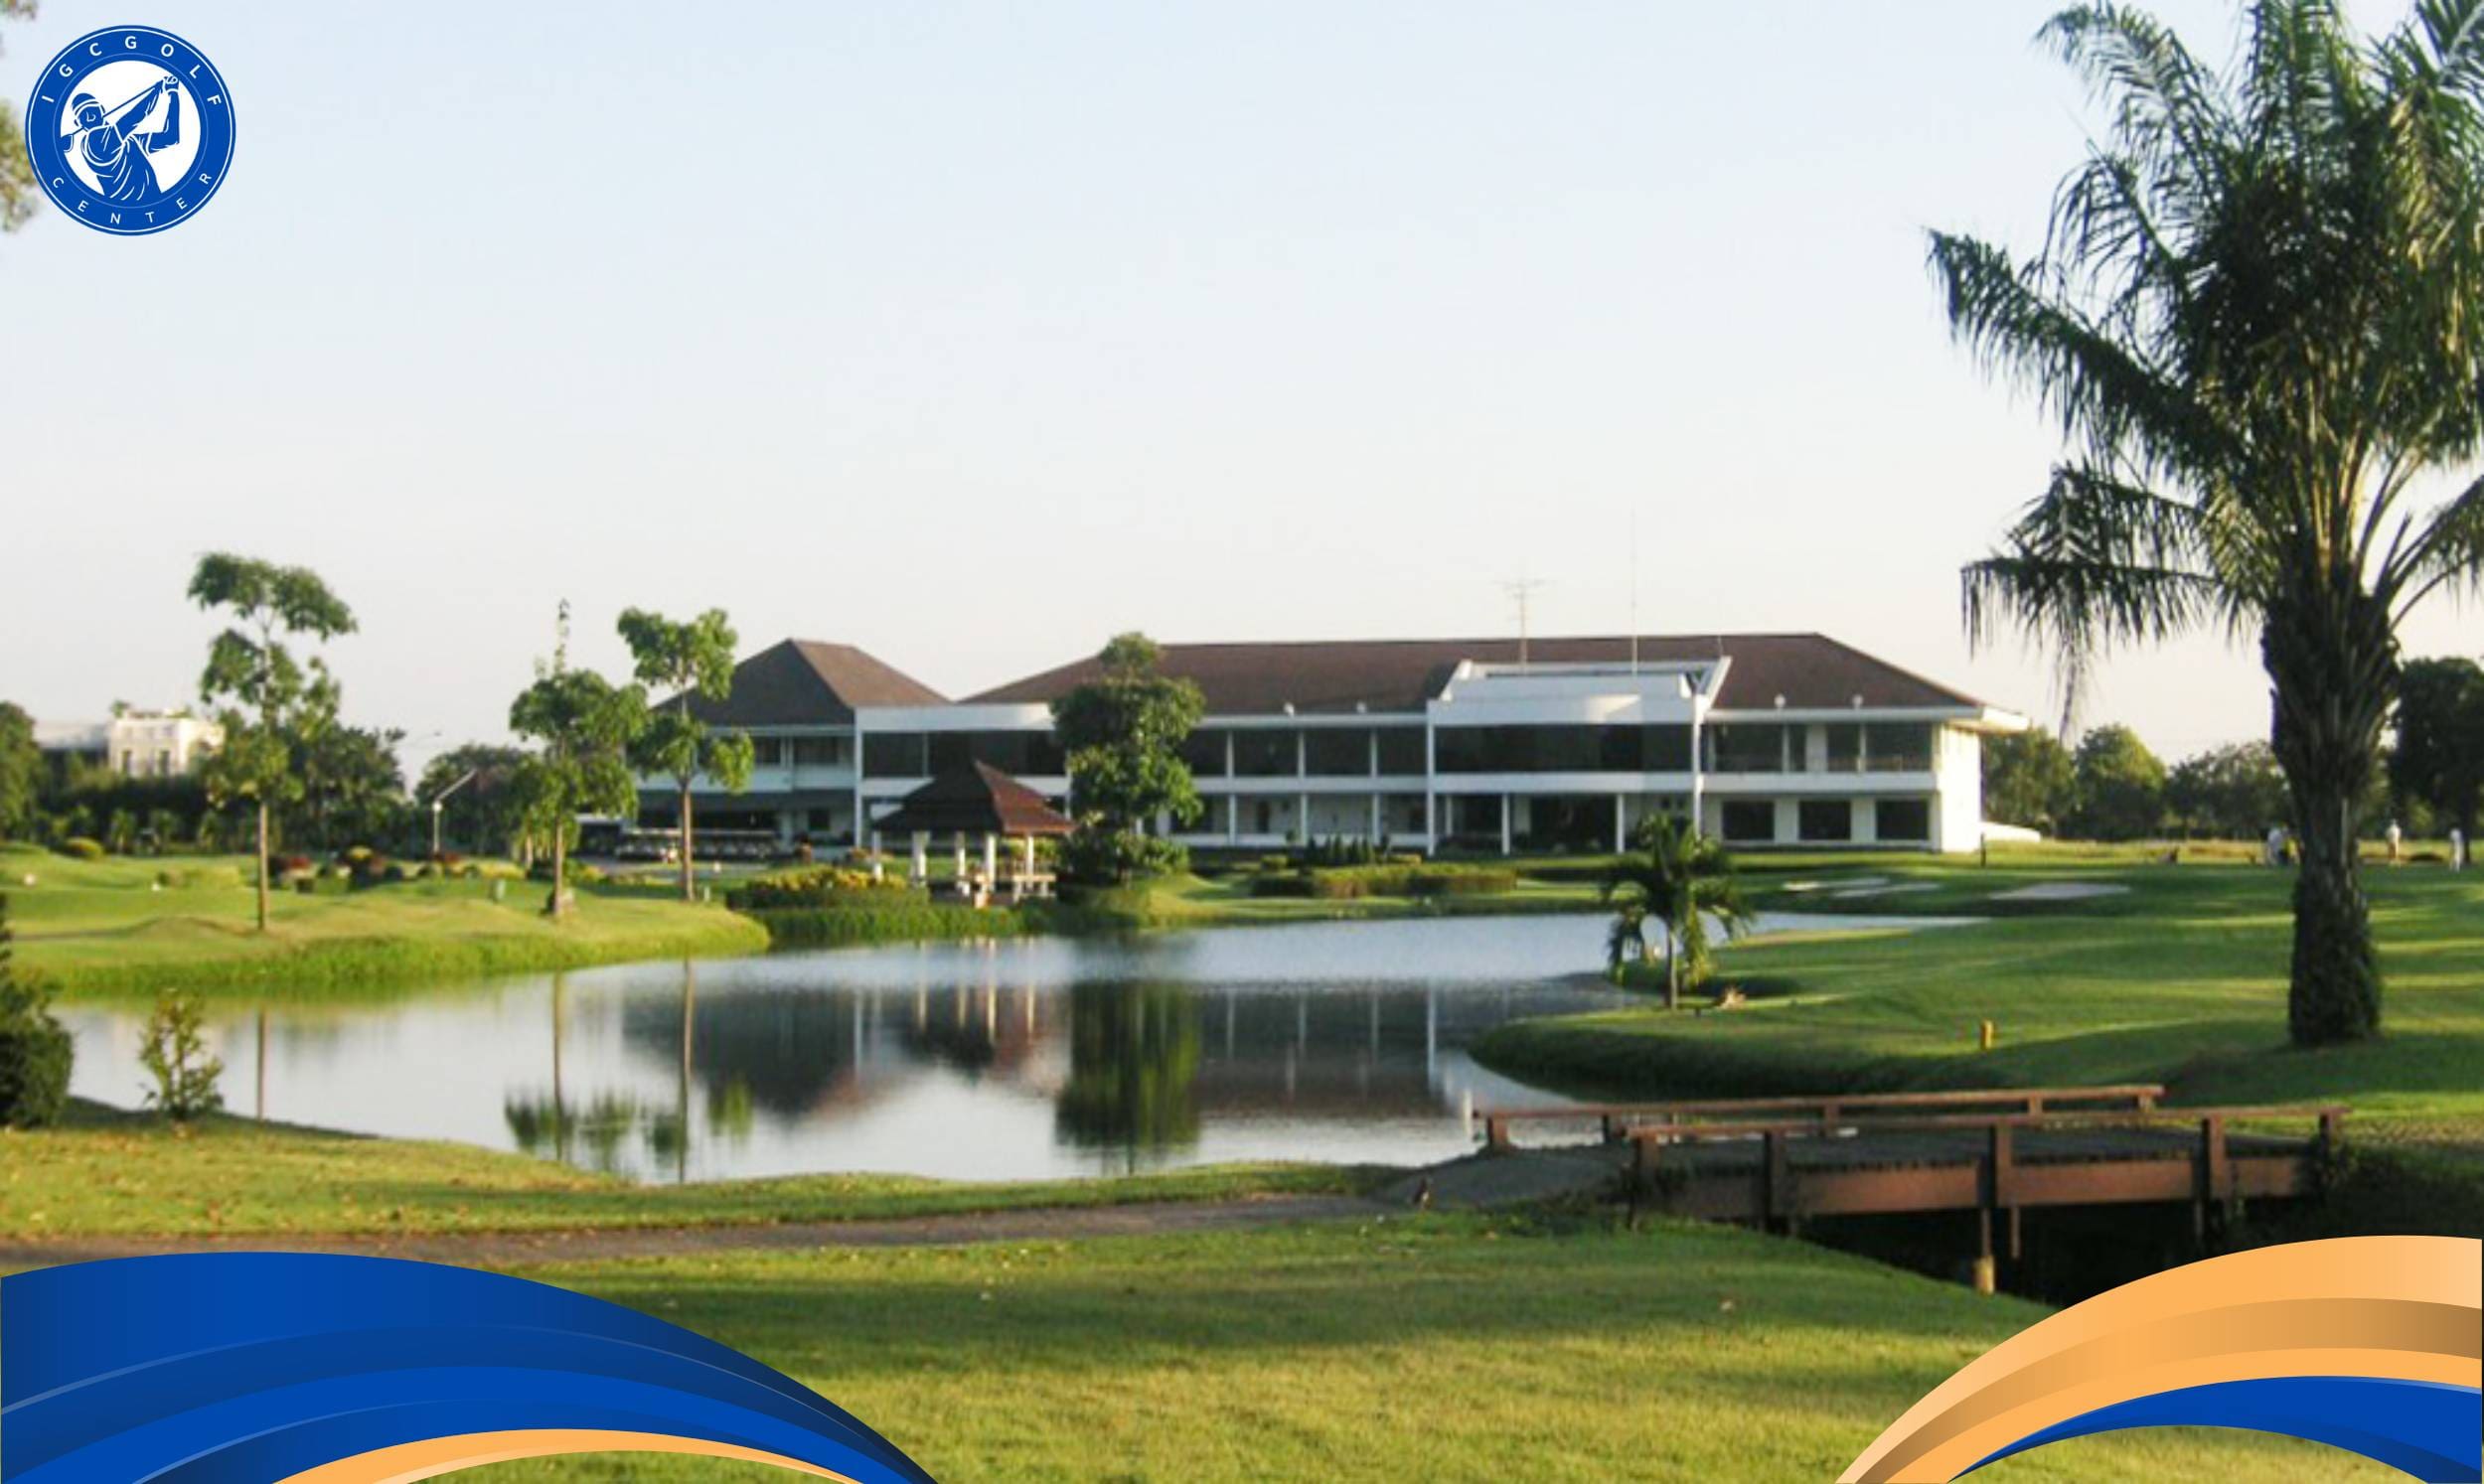 Royal Golf Club Ninh Binh